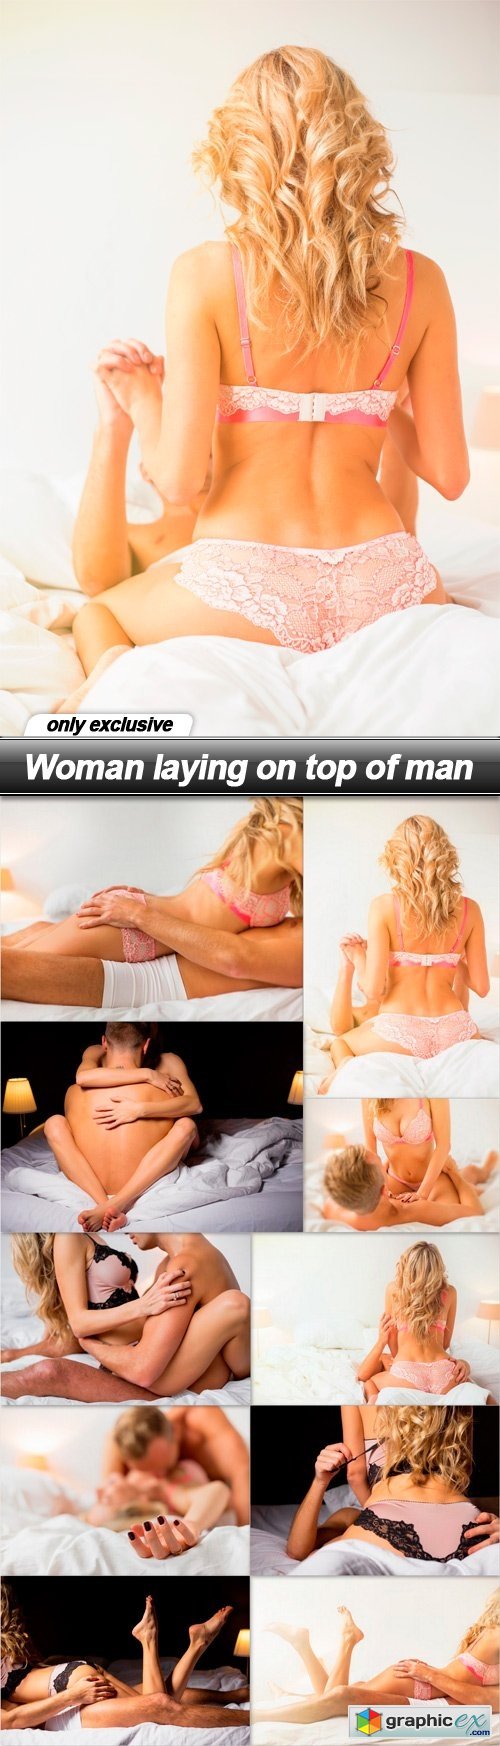 Woman laying on top of man - 10 UHQ JPEG